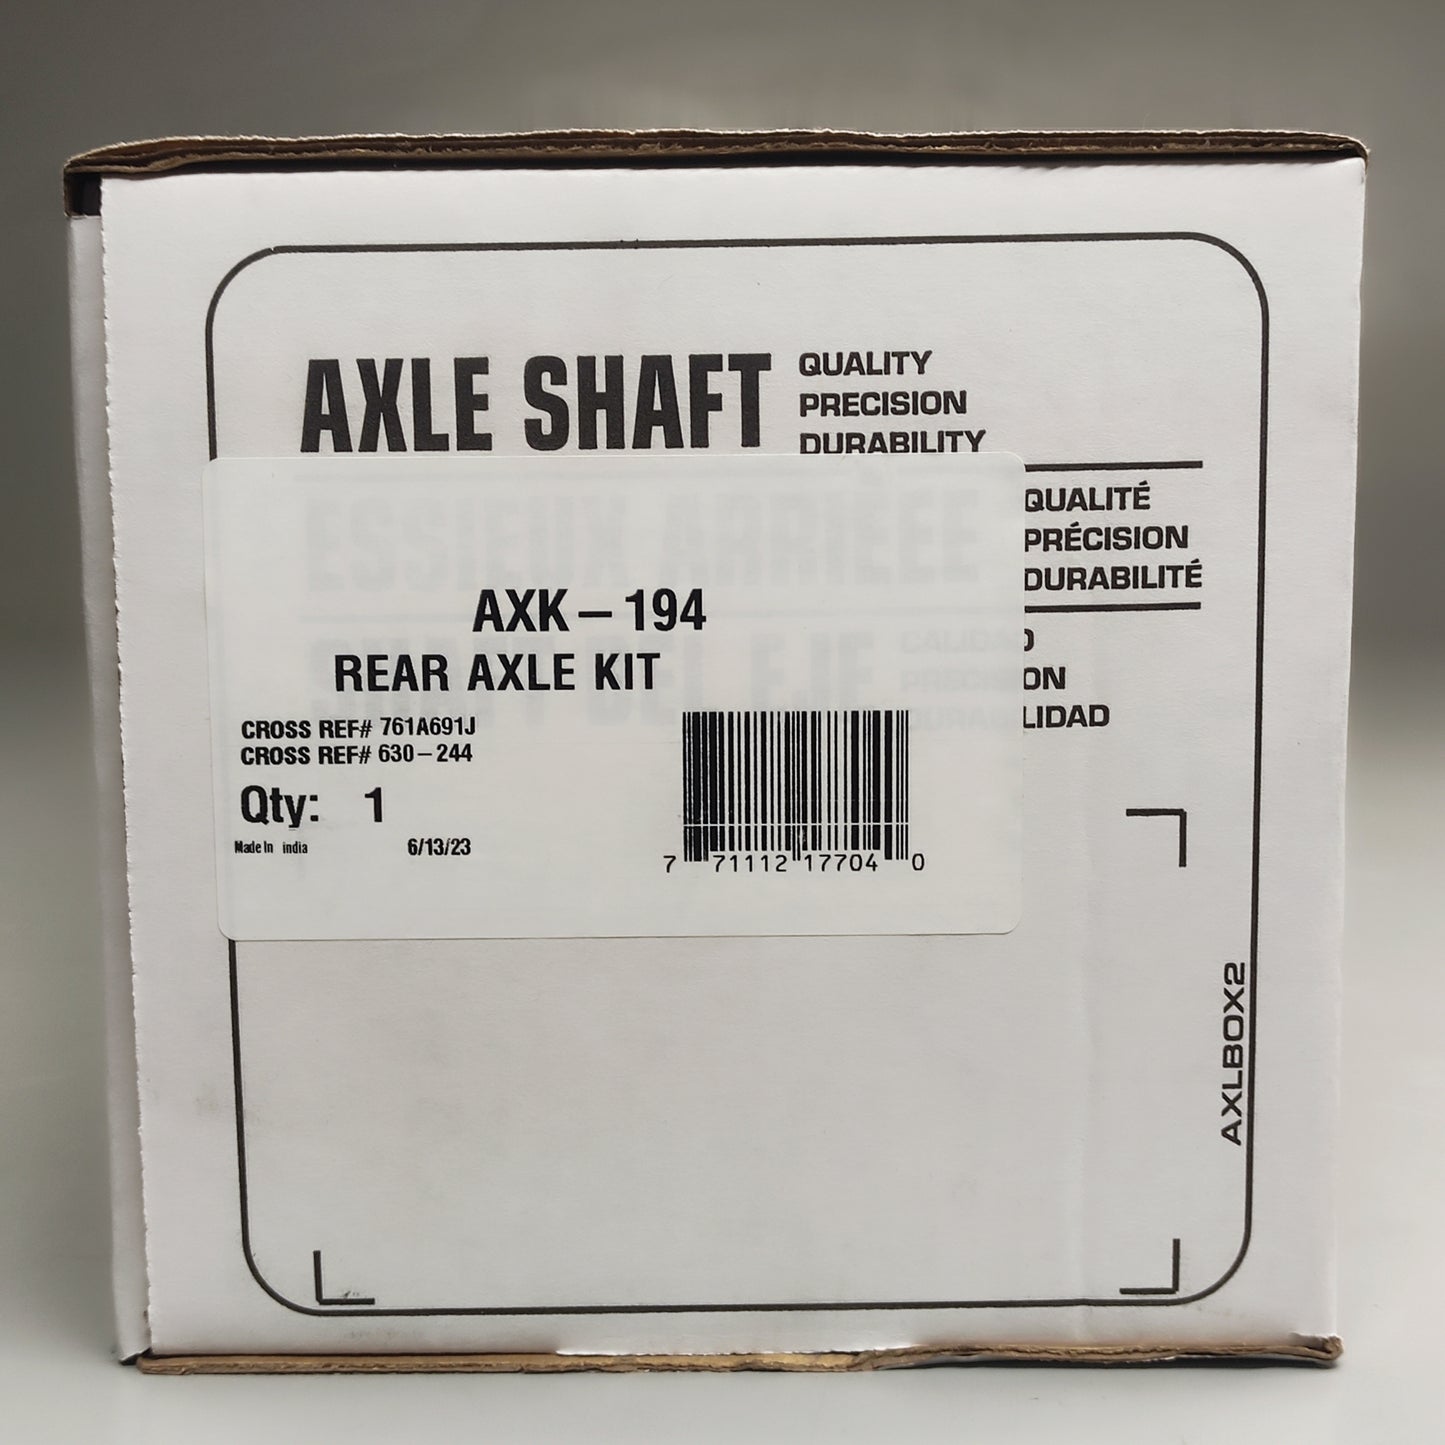 POWER TORQUE Axle Shaft Rear Axle Kit for FORD AXK-194 (Ref 761A691J, 630-244)